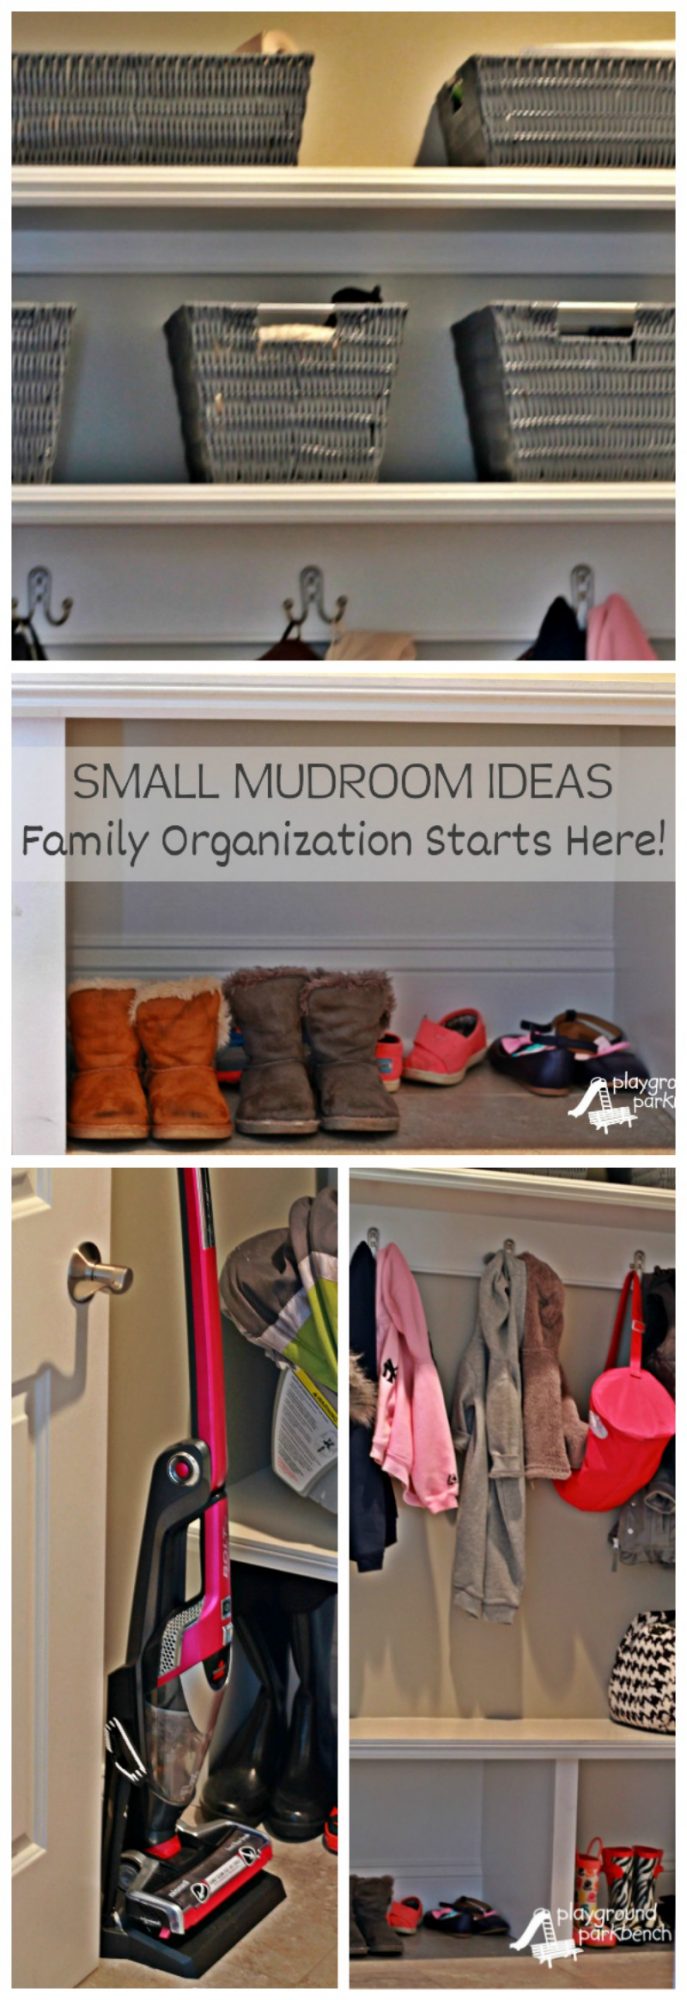 Small Mudroom Ideas - Family Organization Starts Here